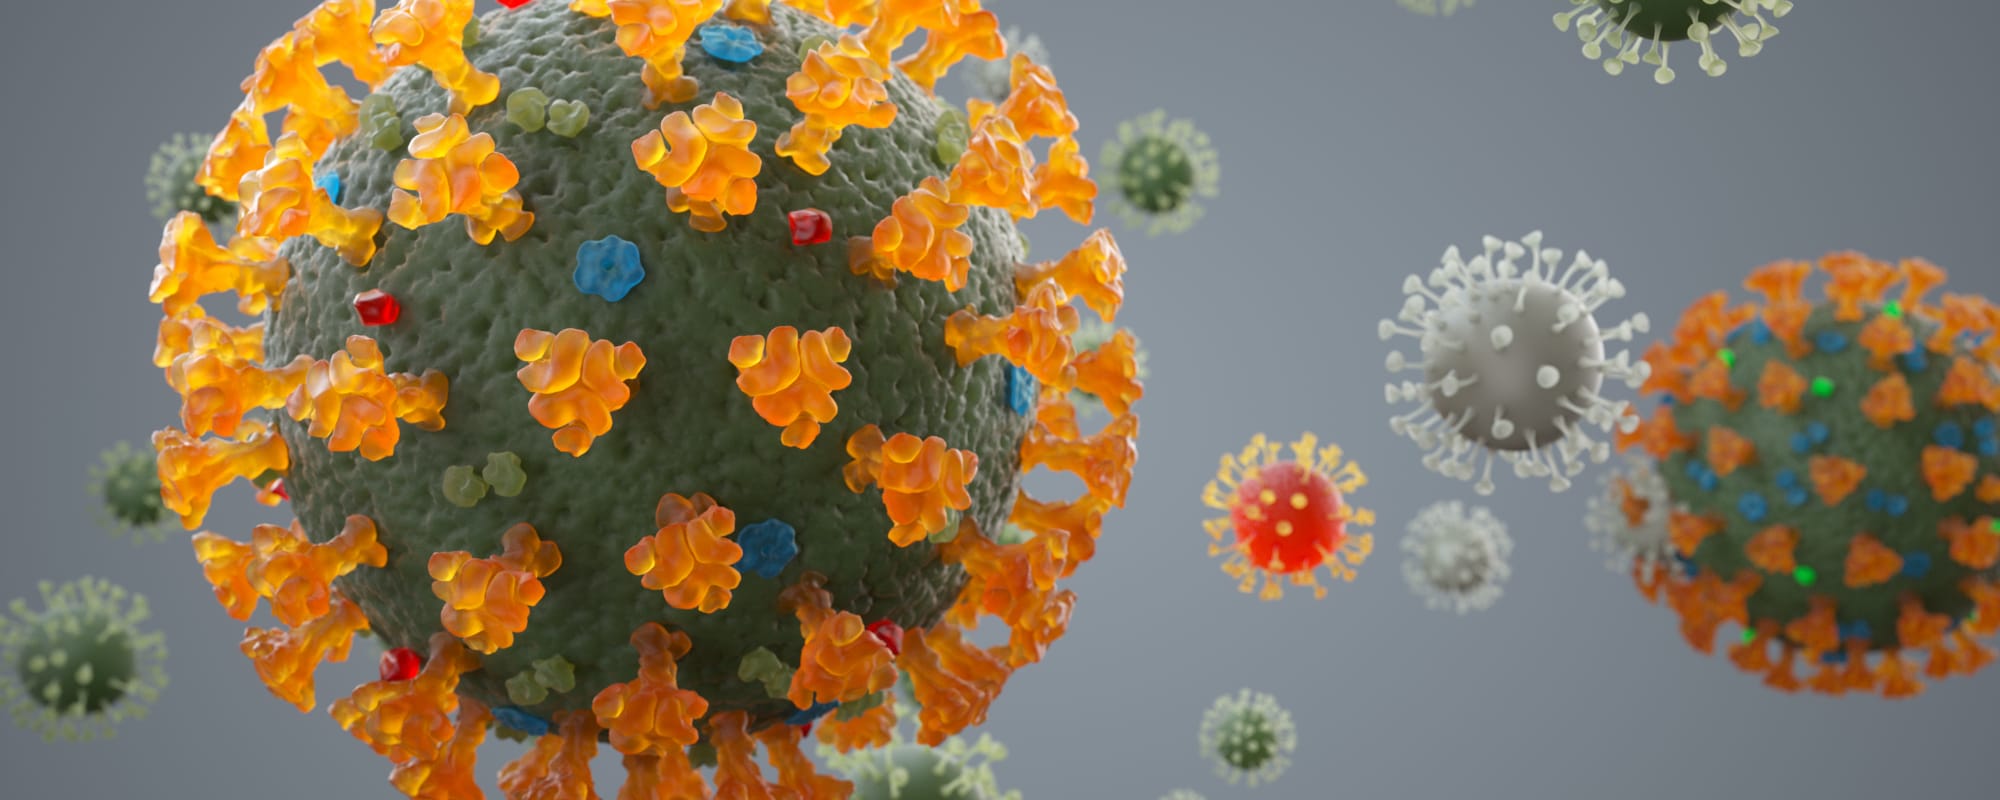 Illustration of a virus